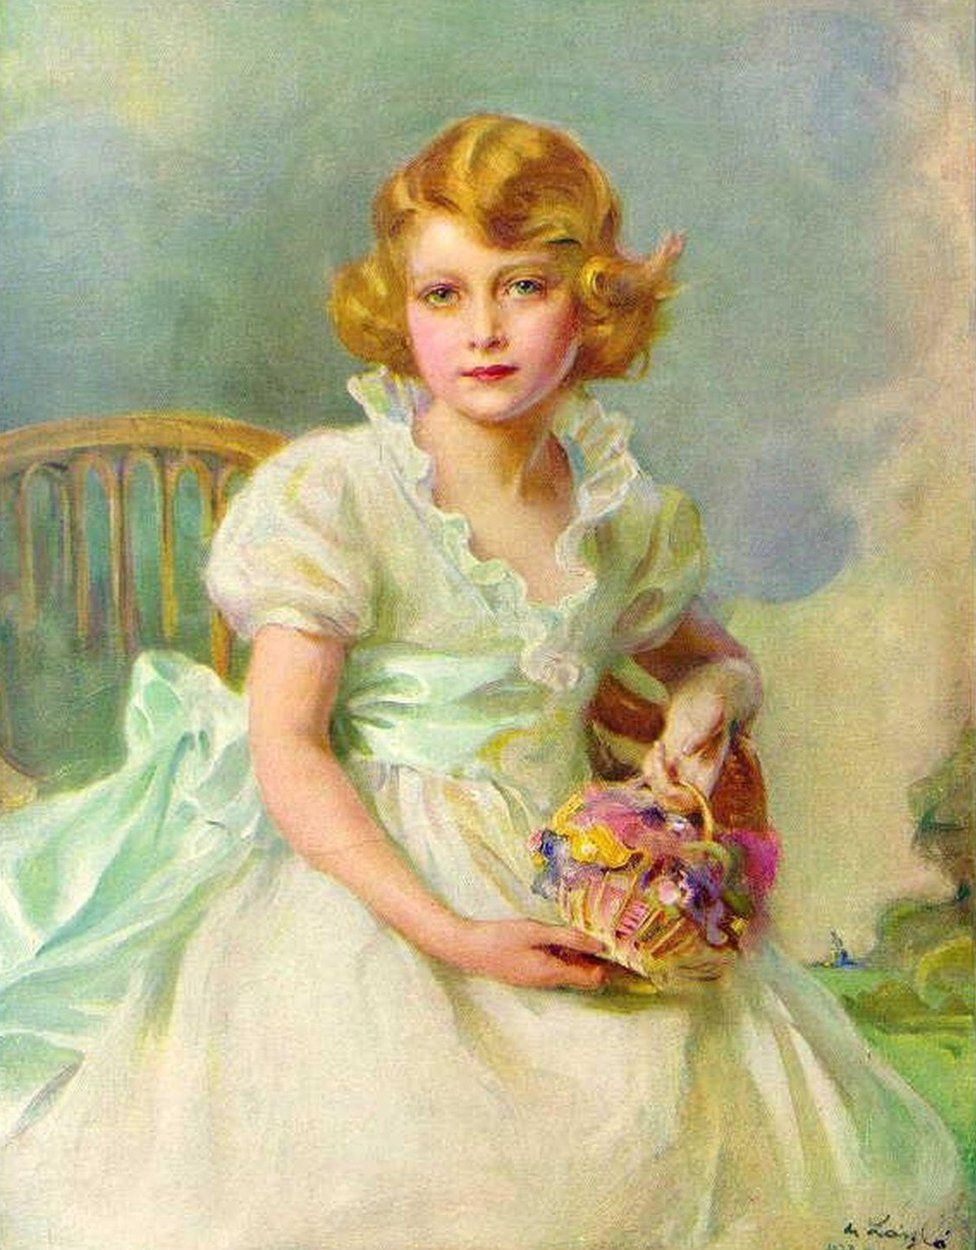 A portrait of Prince Elizabeth, aged 7, holding a basket of flowers, painted by Philip de László in 1933